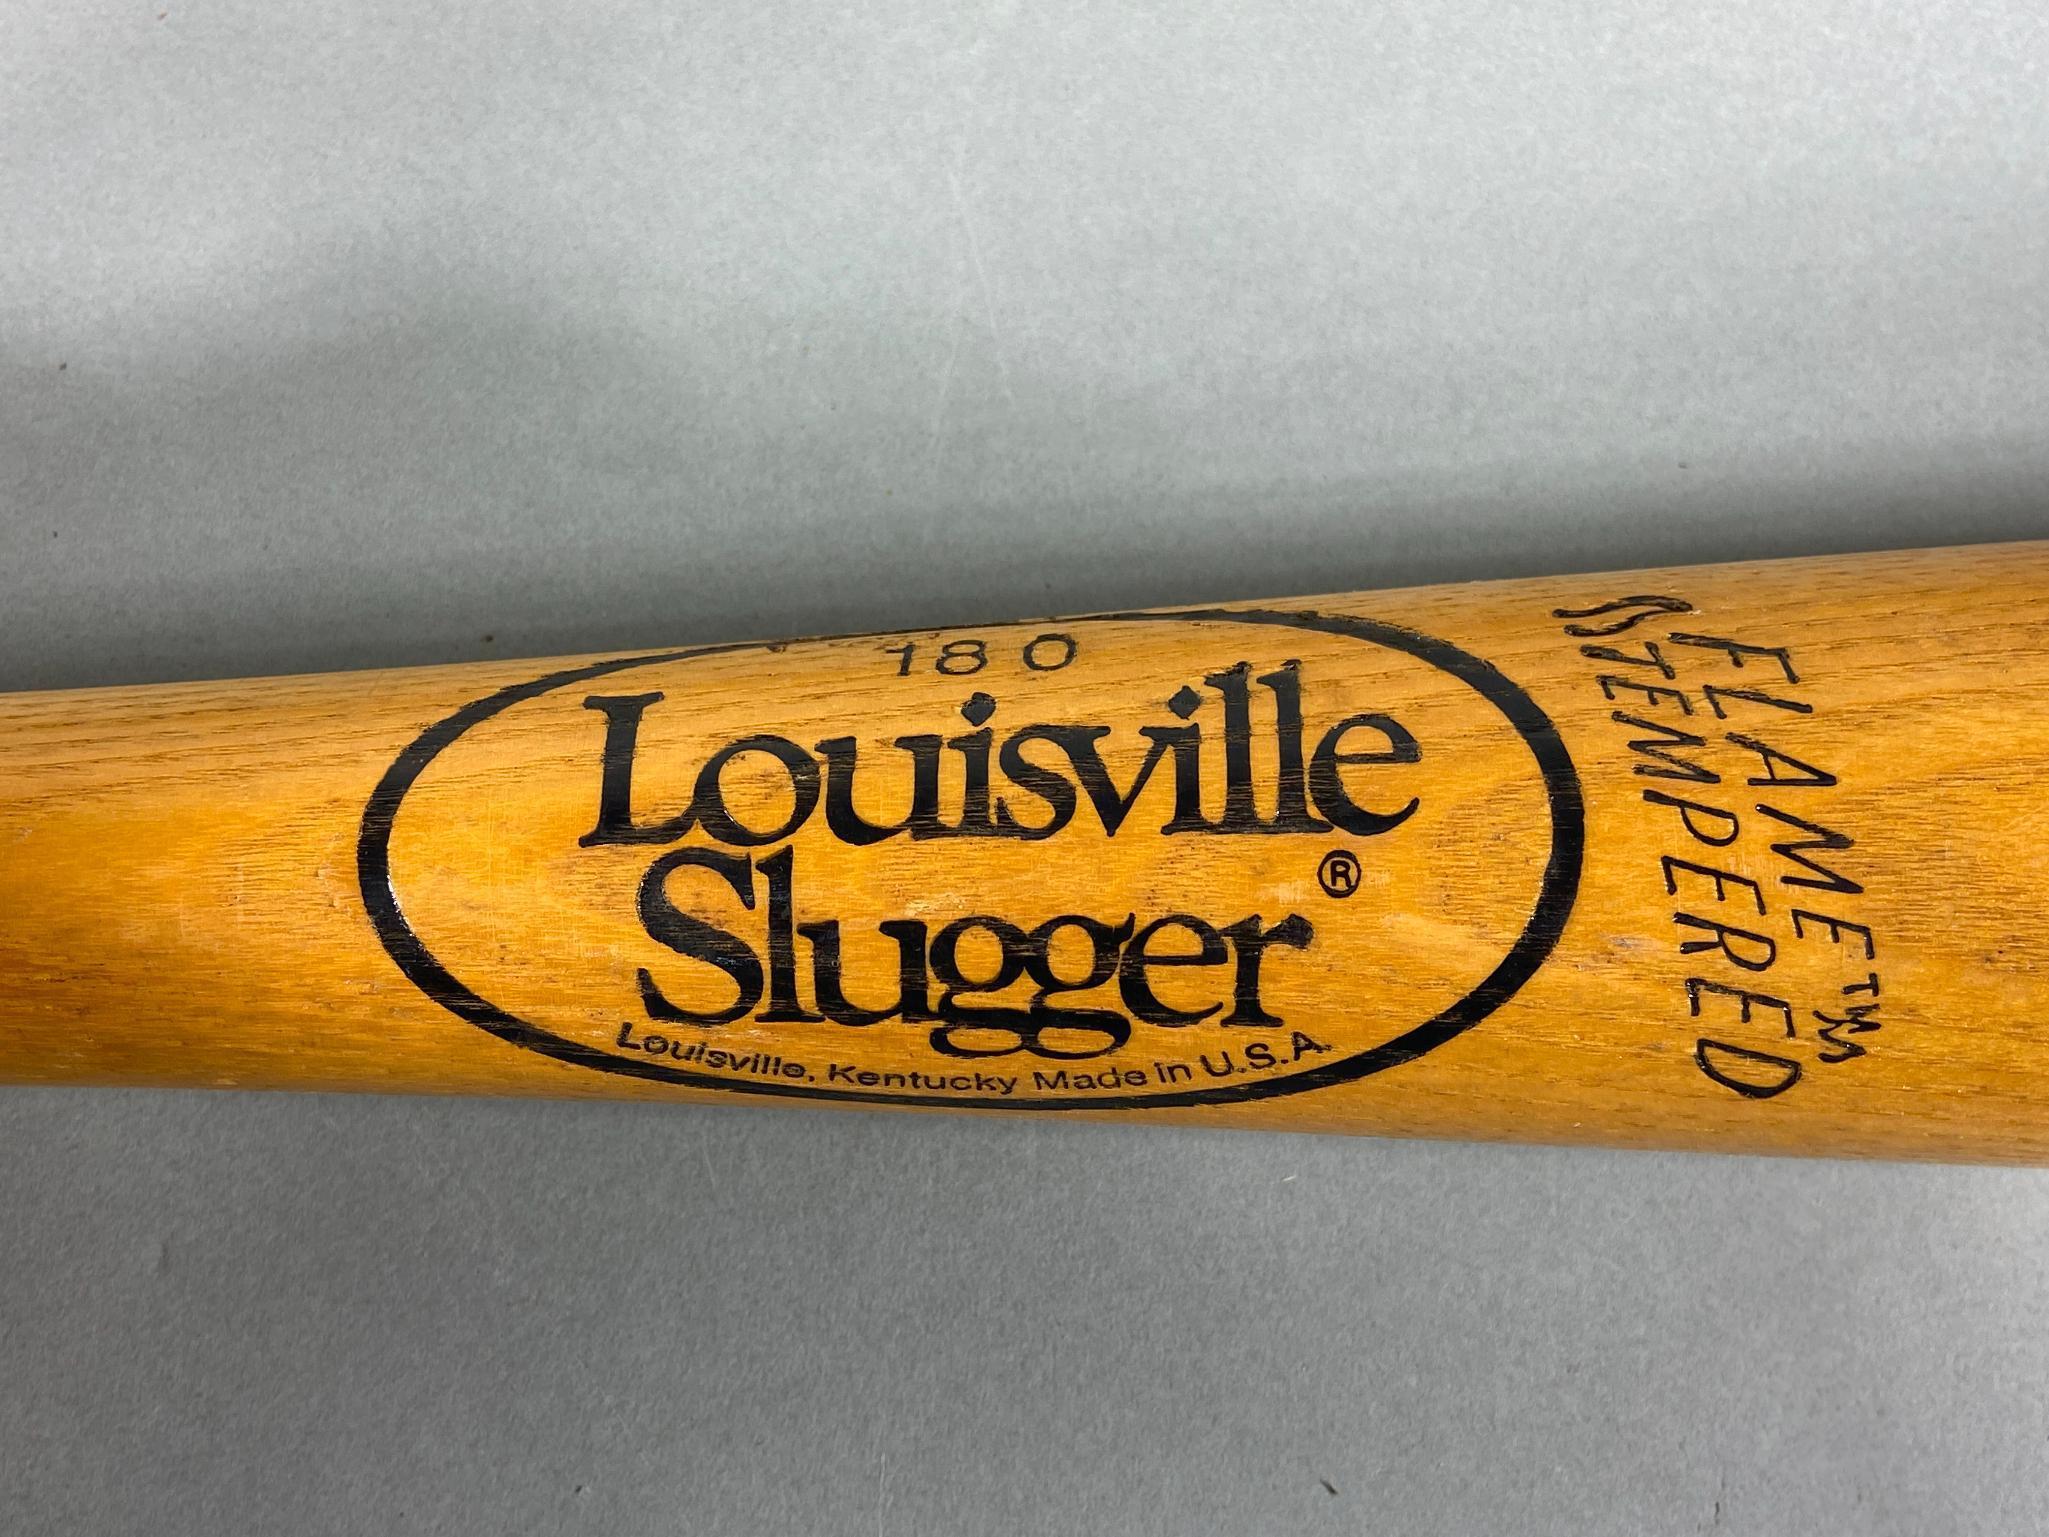 6 Vintage Baseball Bats including Louisville Slugger and More